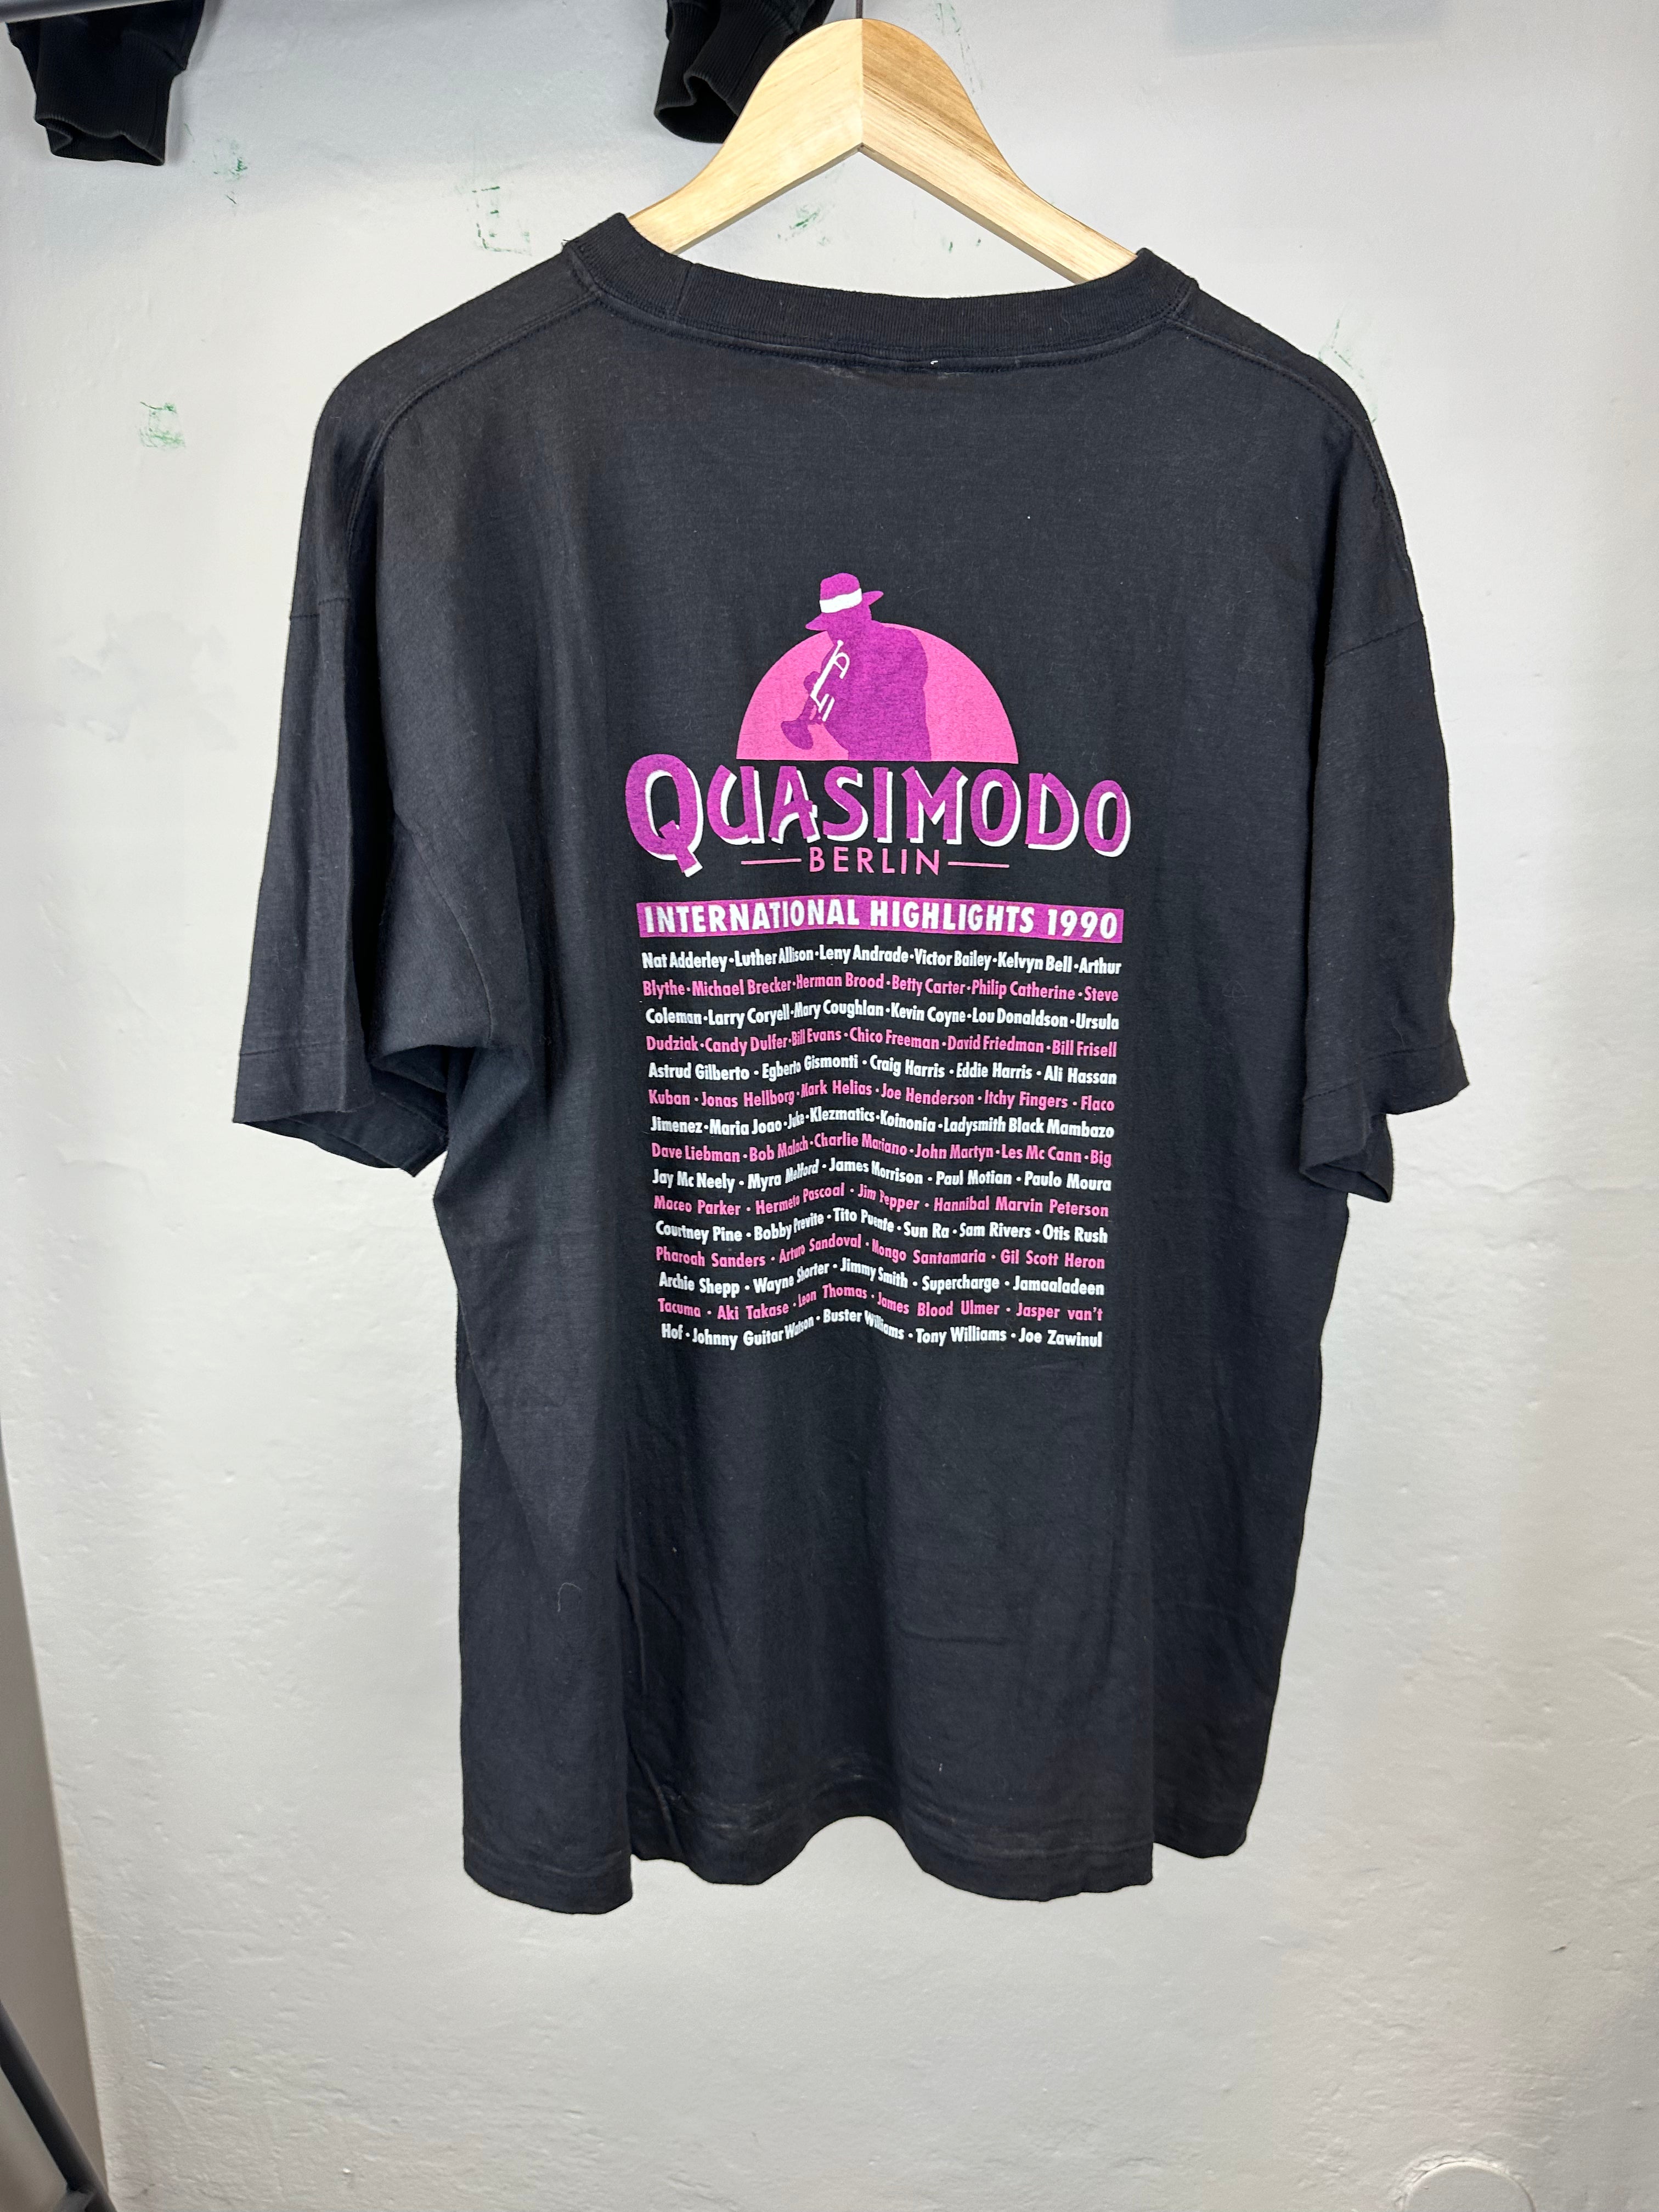 Vintage Quasimodo 1990 T-shirt - size L